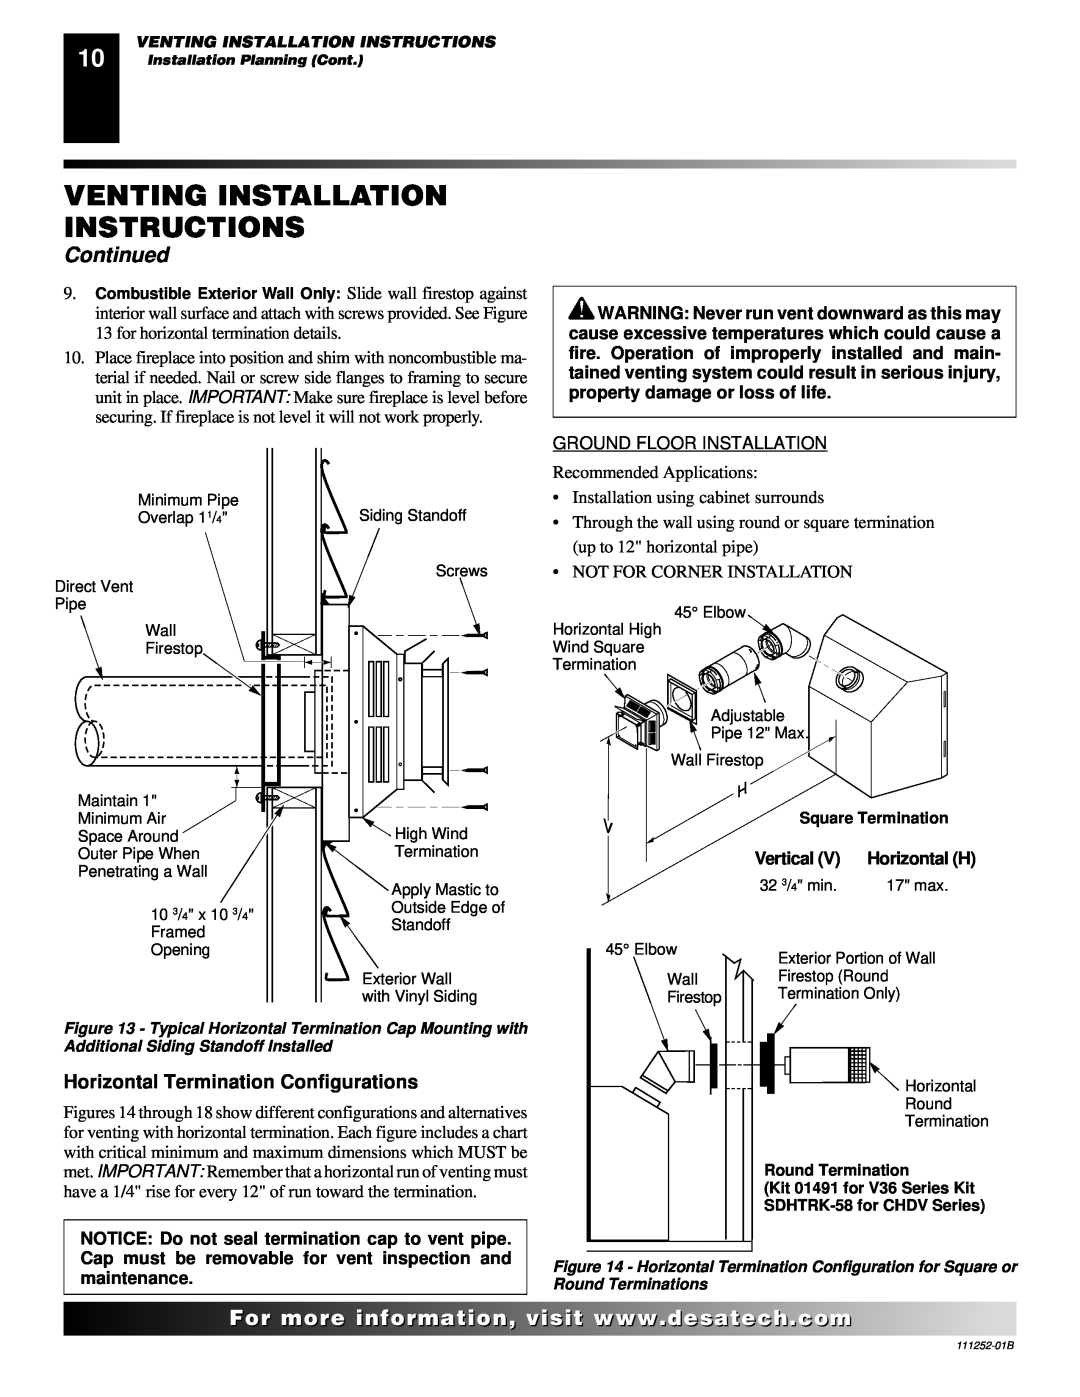 Desa (V)V36PA(1) installation manual Horizontal Termination Configurations, Venting Installation Instructions, Continued 